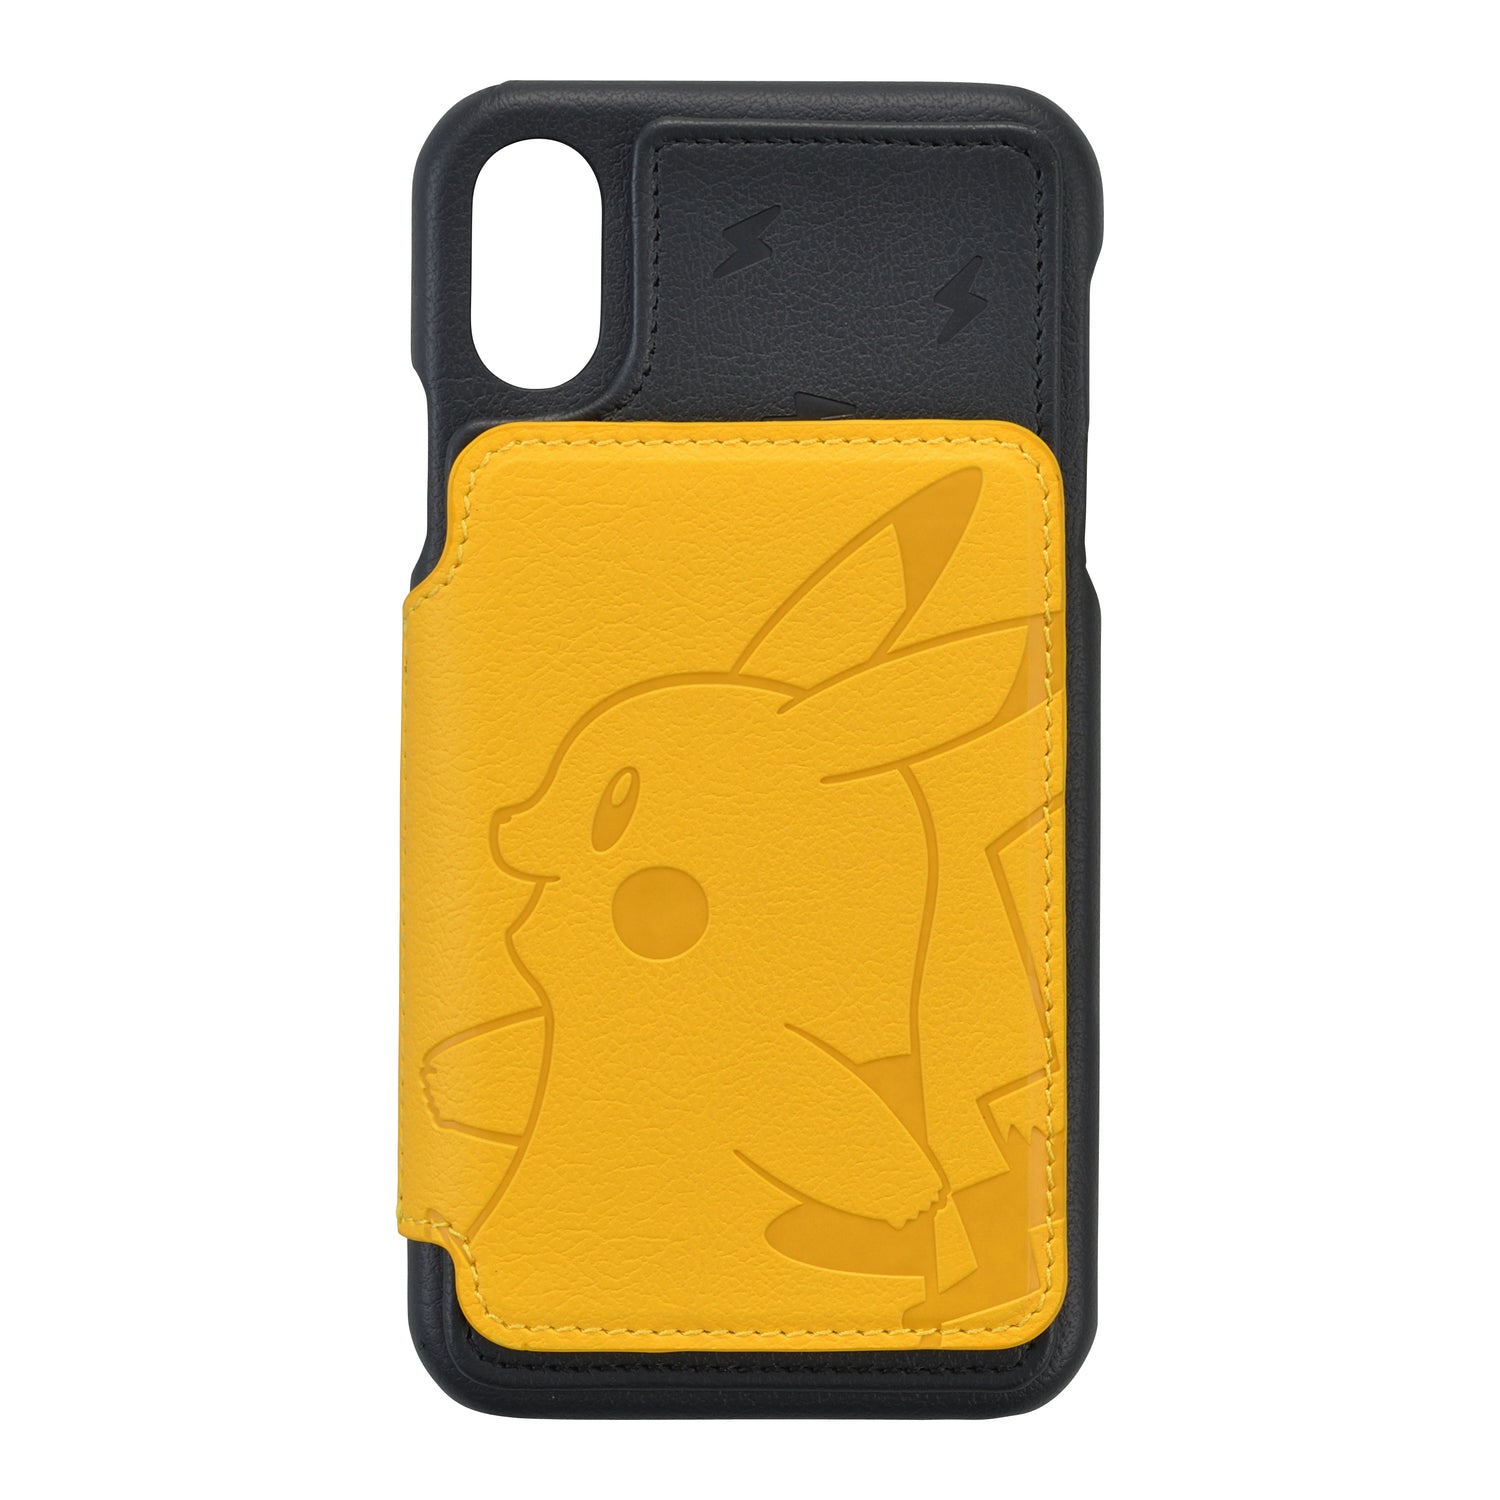 Pikachu Iphone Xr Case Cover Card Pocket Pokemon Center Japan Original Verygoods Jp